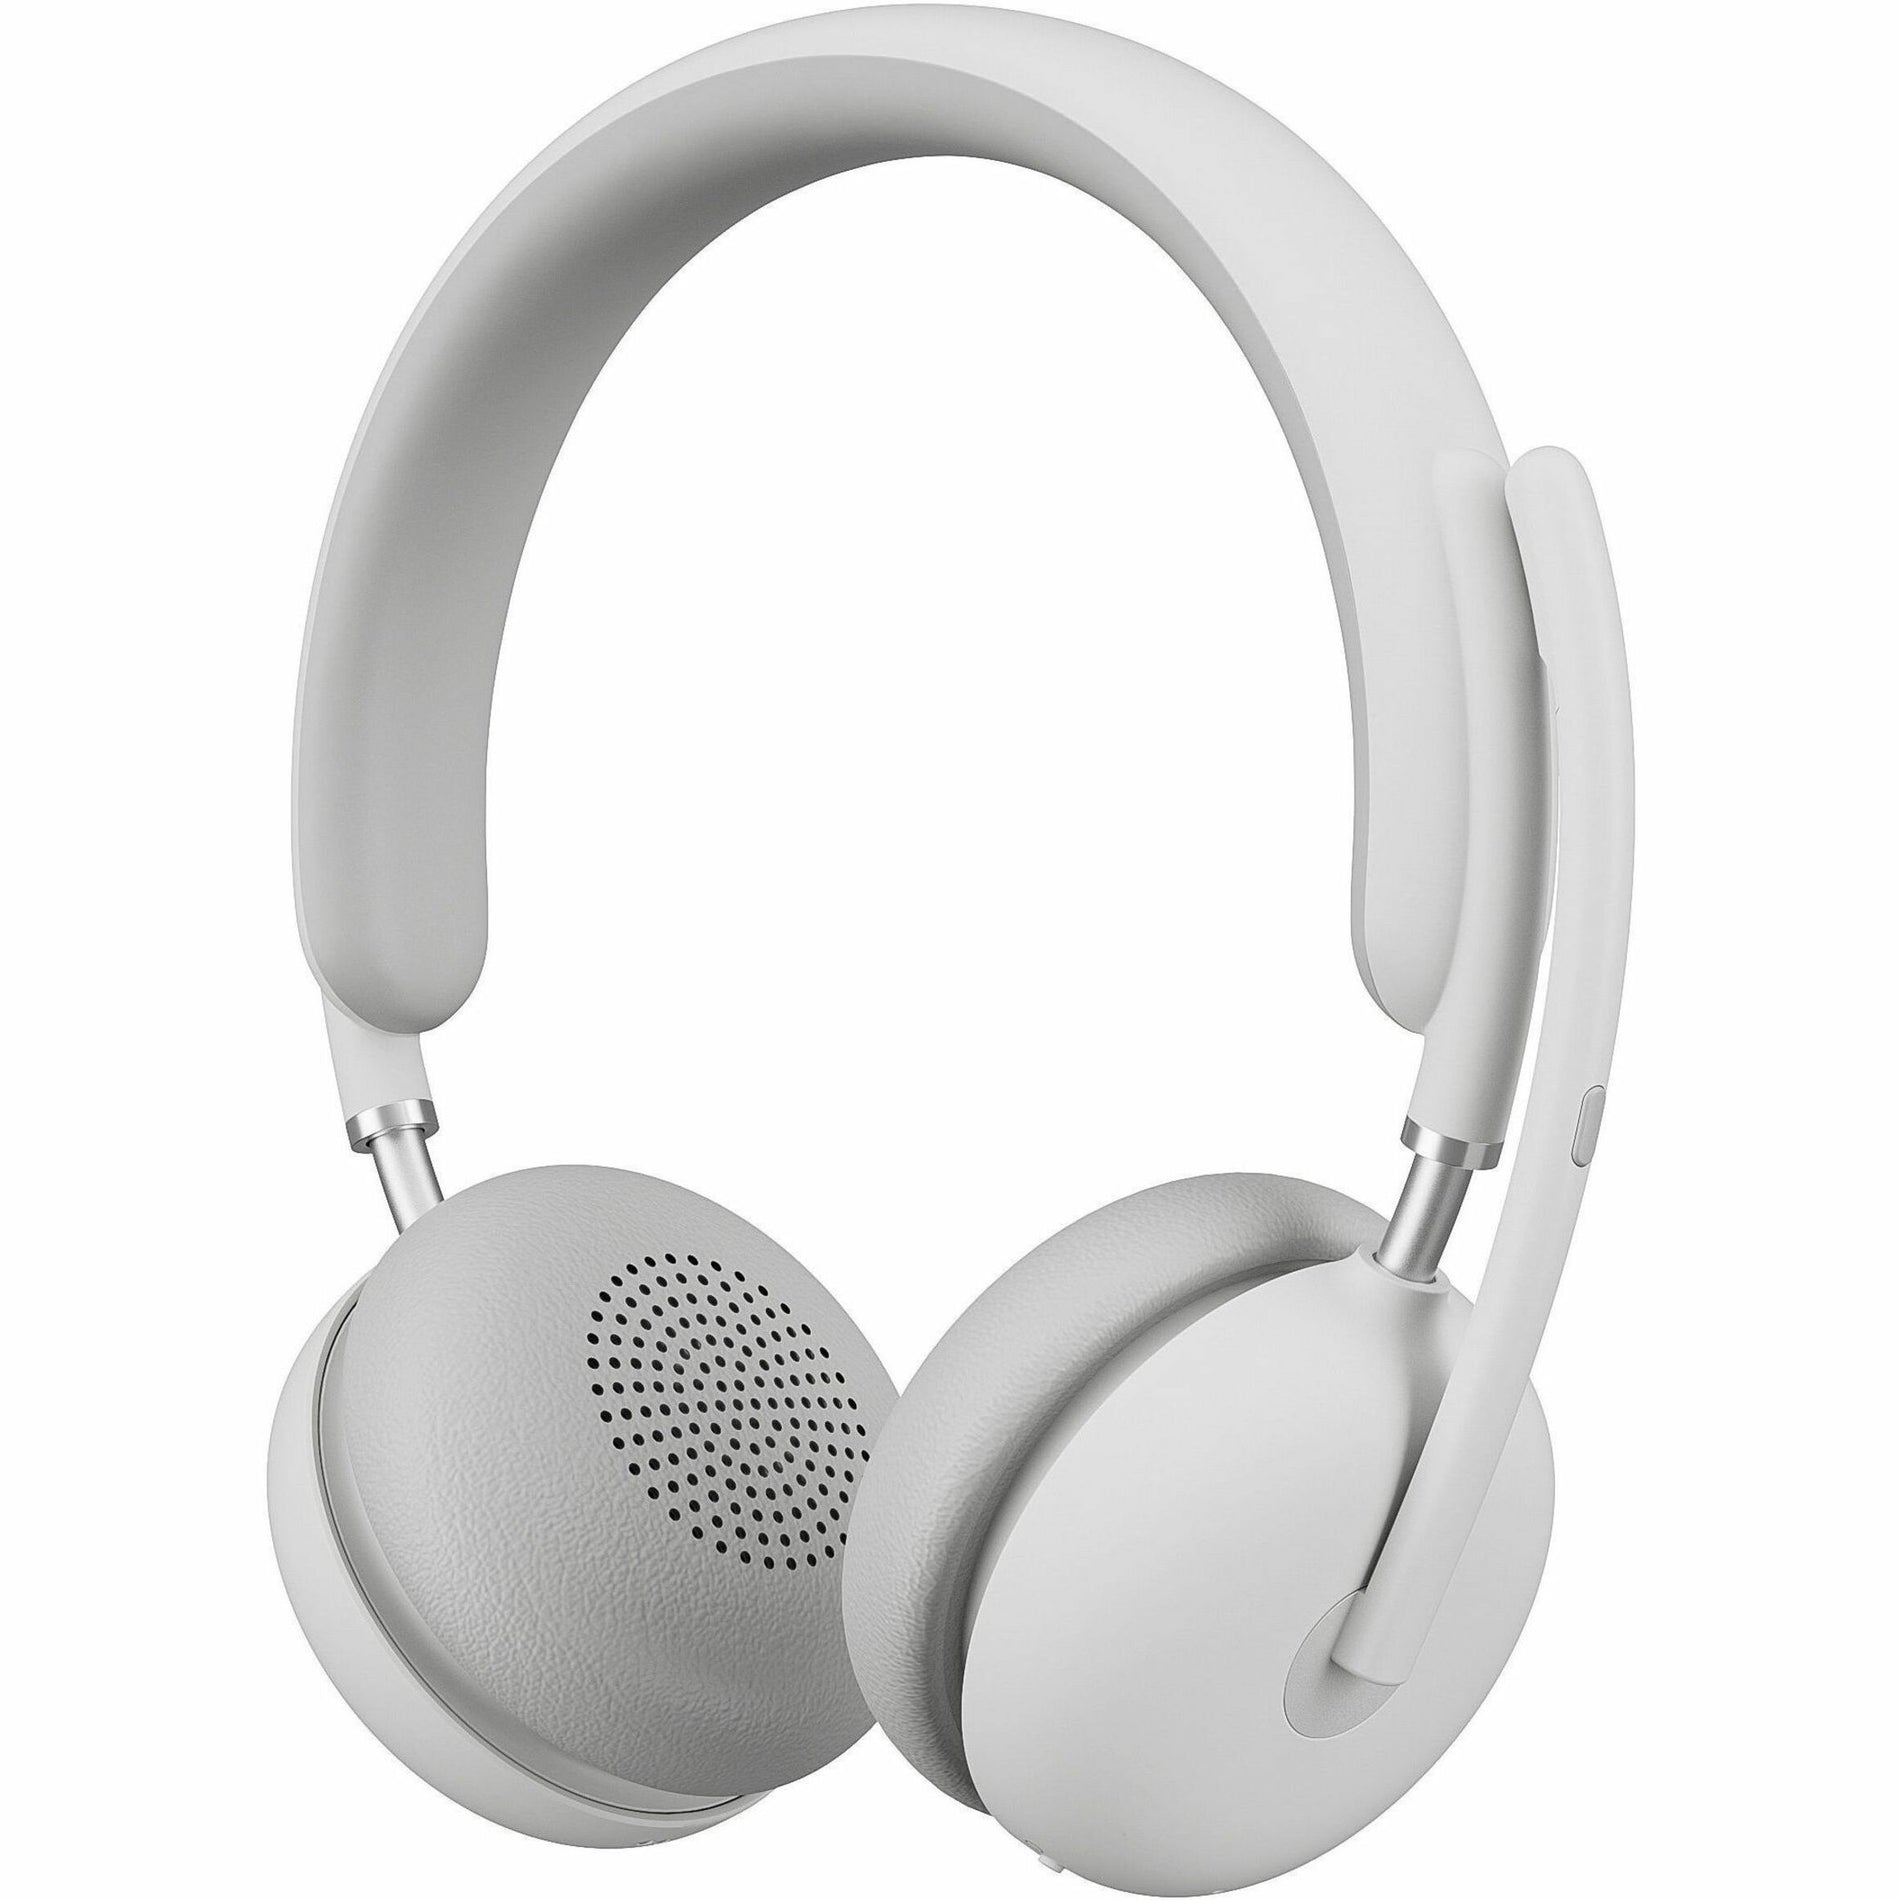 Logitech 989-001175 Zone Wireless 2 Headset, Noise Cancelling, 2 Year Warranty, Mac/PC Compatible